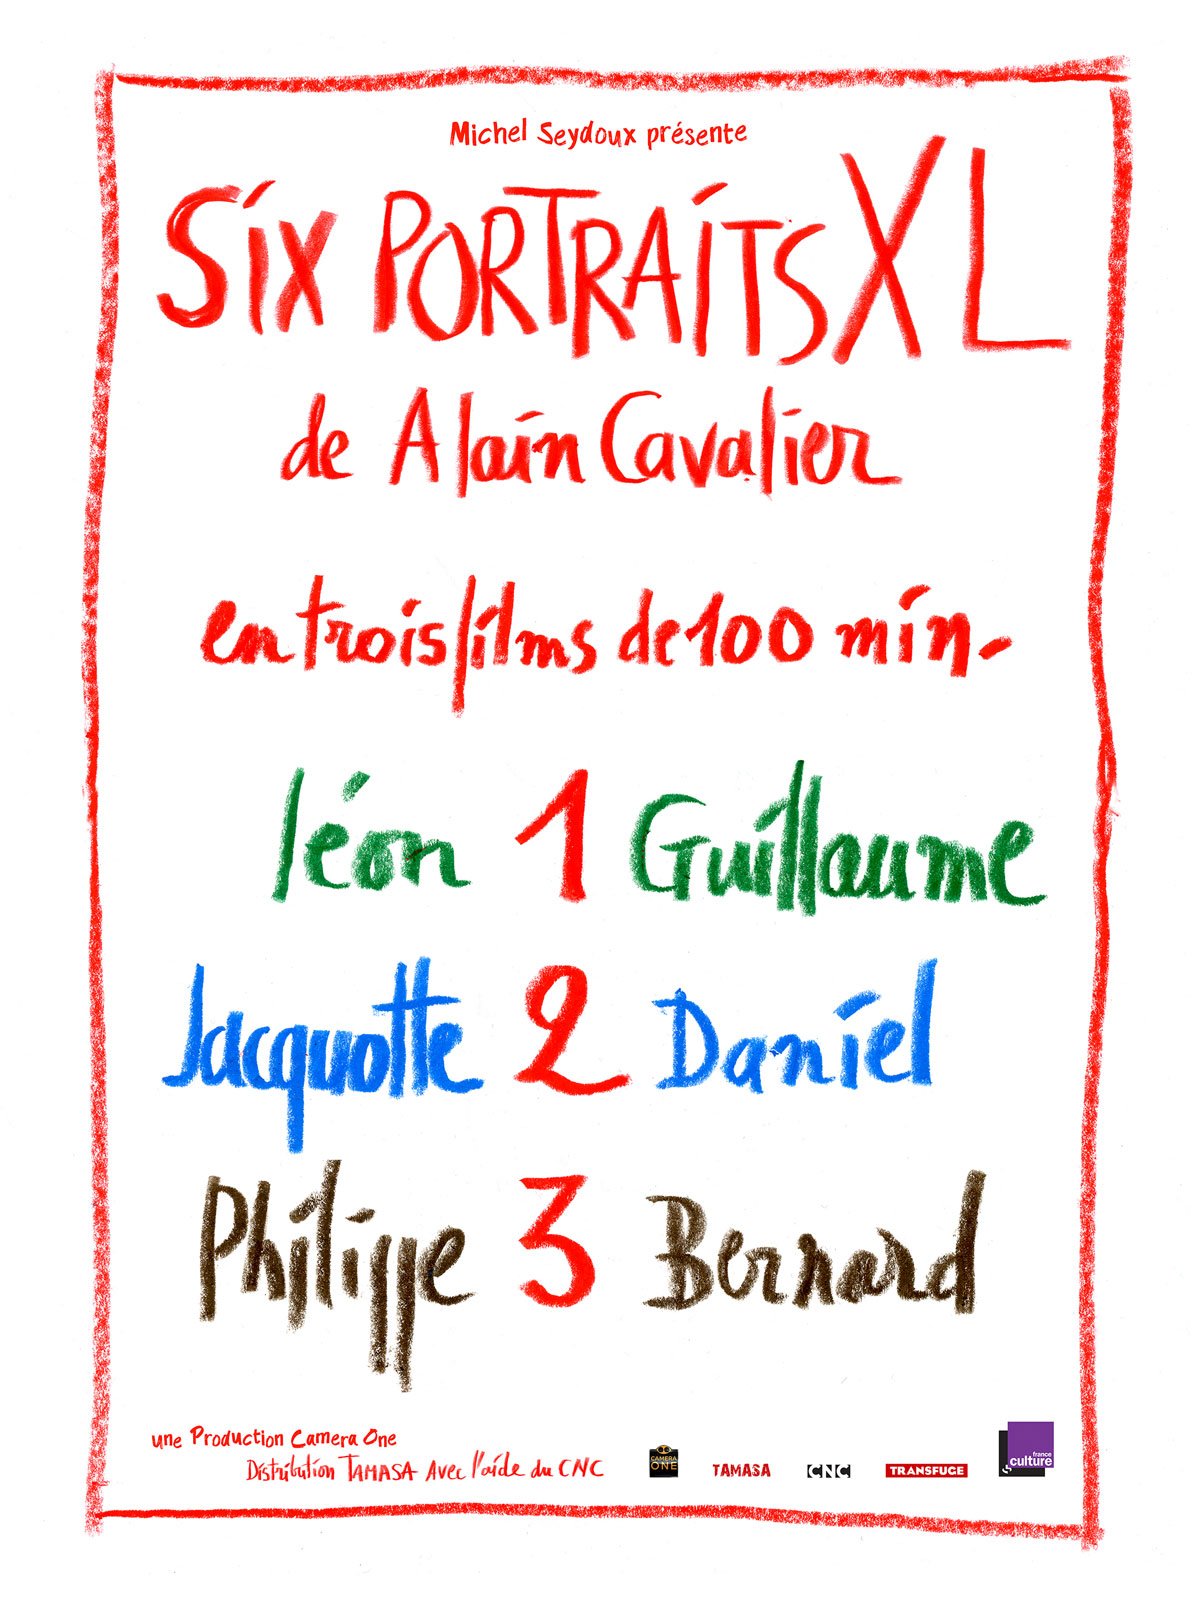 Six portraits XL : 3 Philippe et Bernard : Affiche